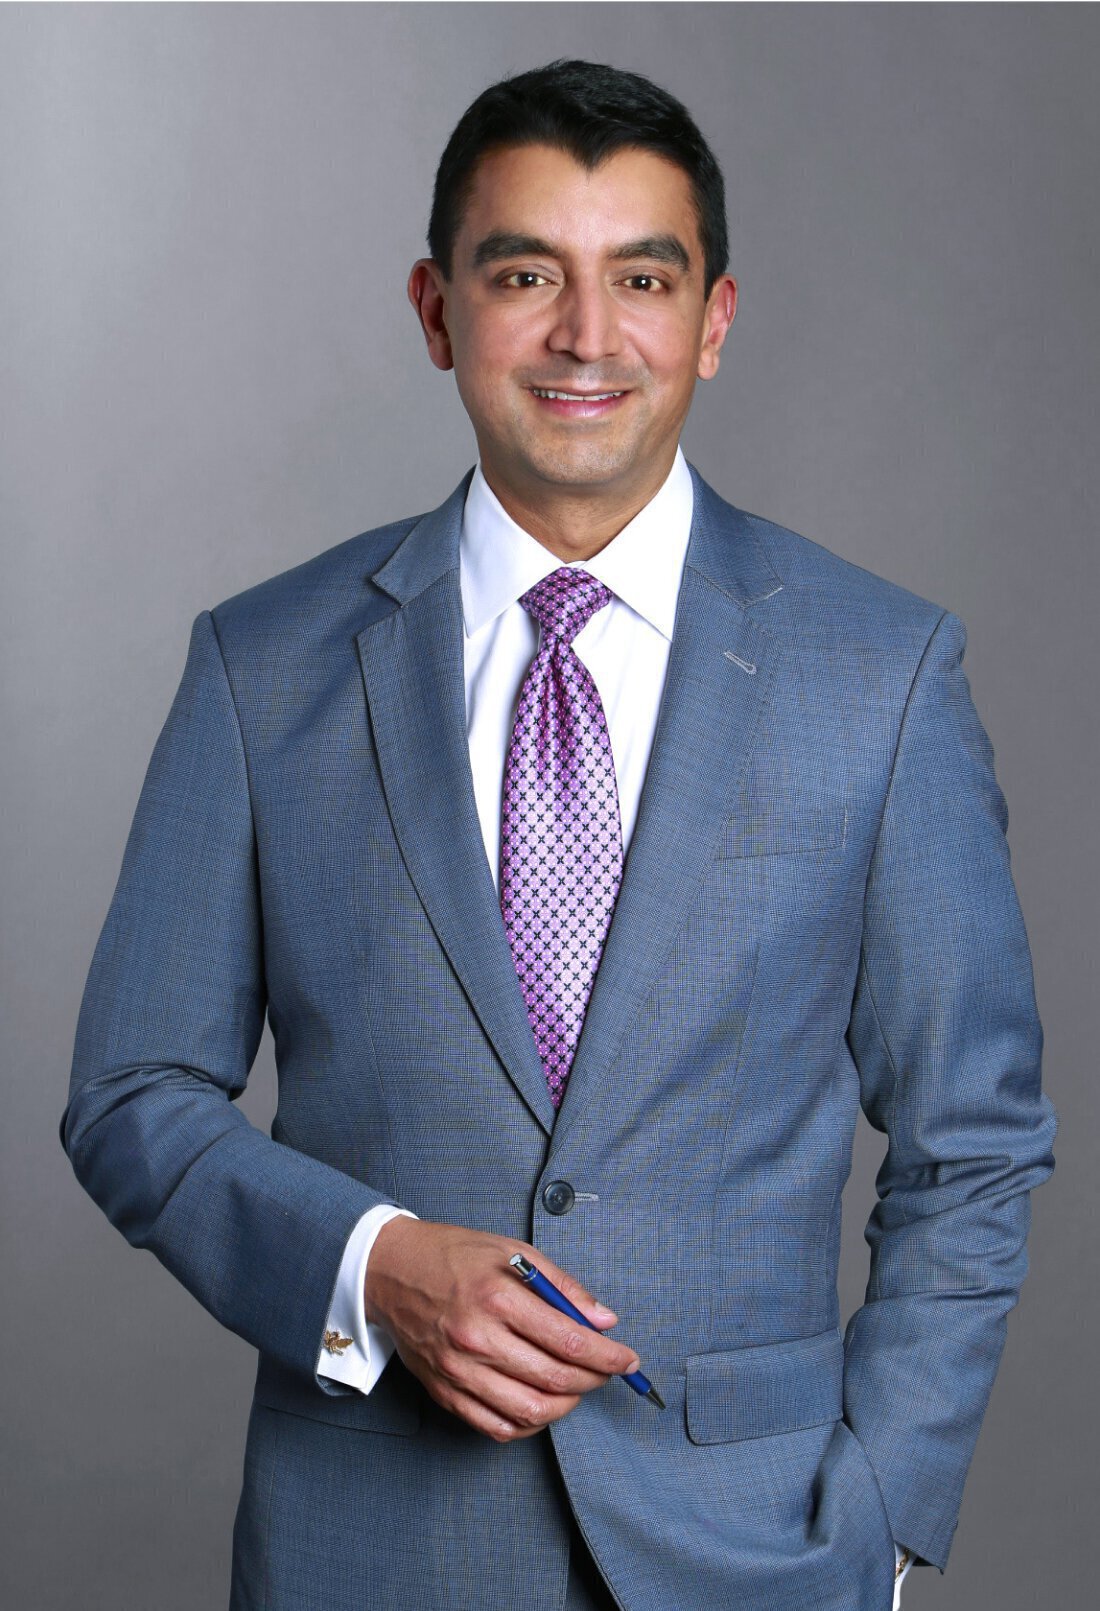 Missouri Plastic Surgeon Dr. Nayak in a suit